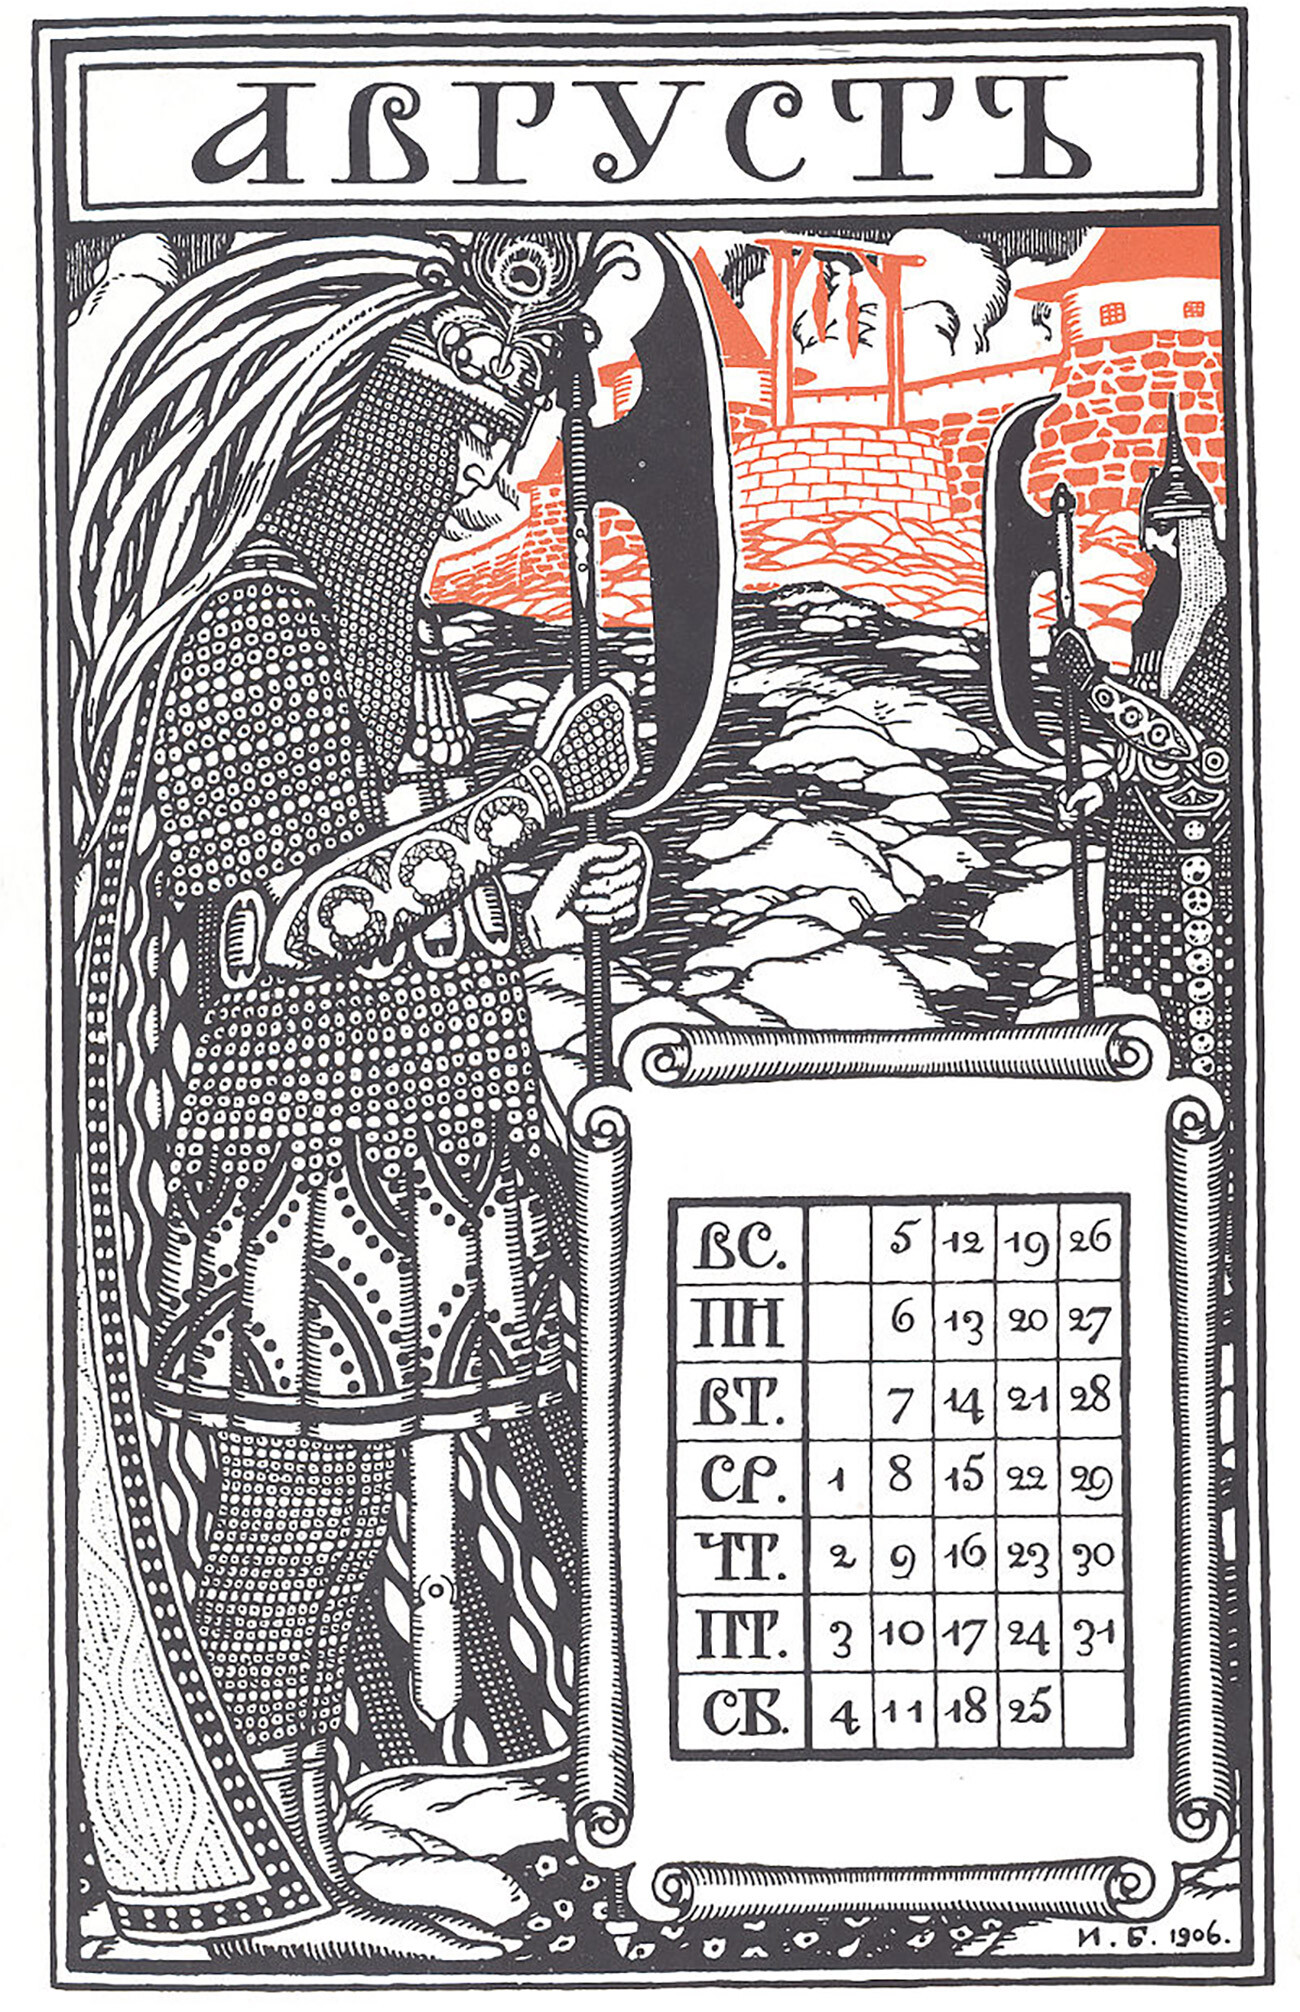 Calendario ruso de agosto de 1906, diseñado por Iván Bilibin. Obsérvese que todas las semanas comienzan en 